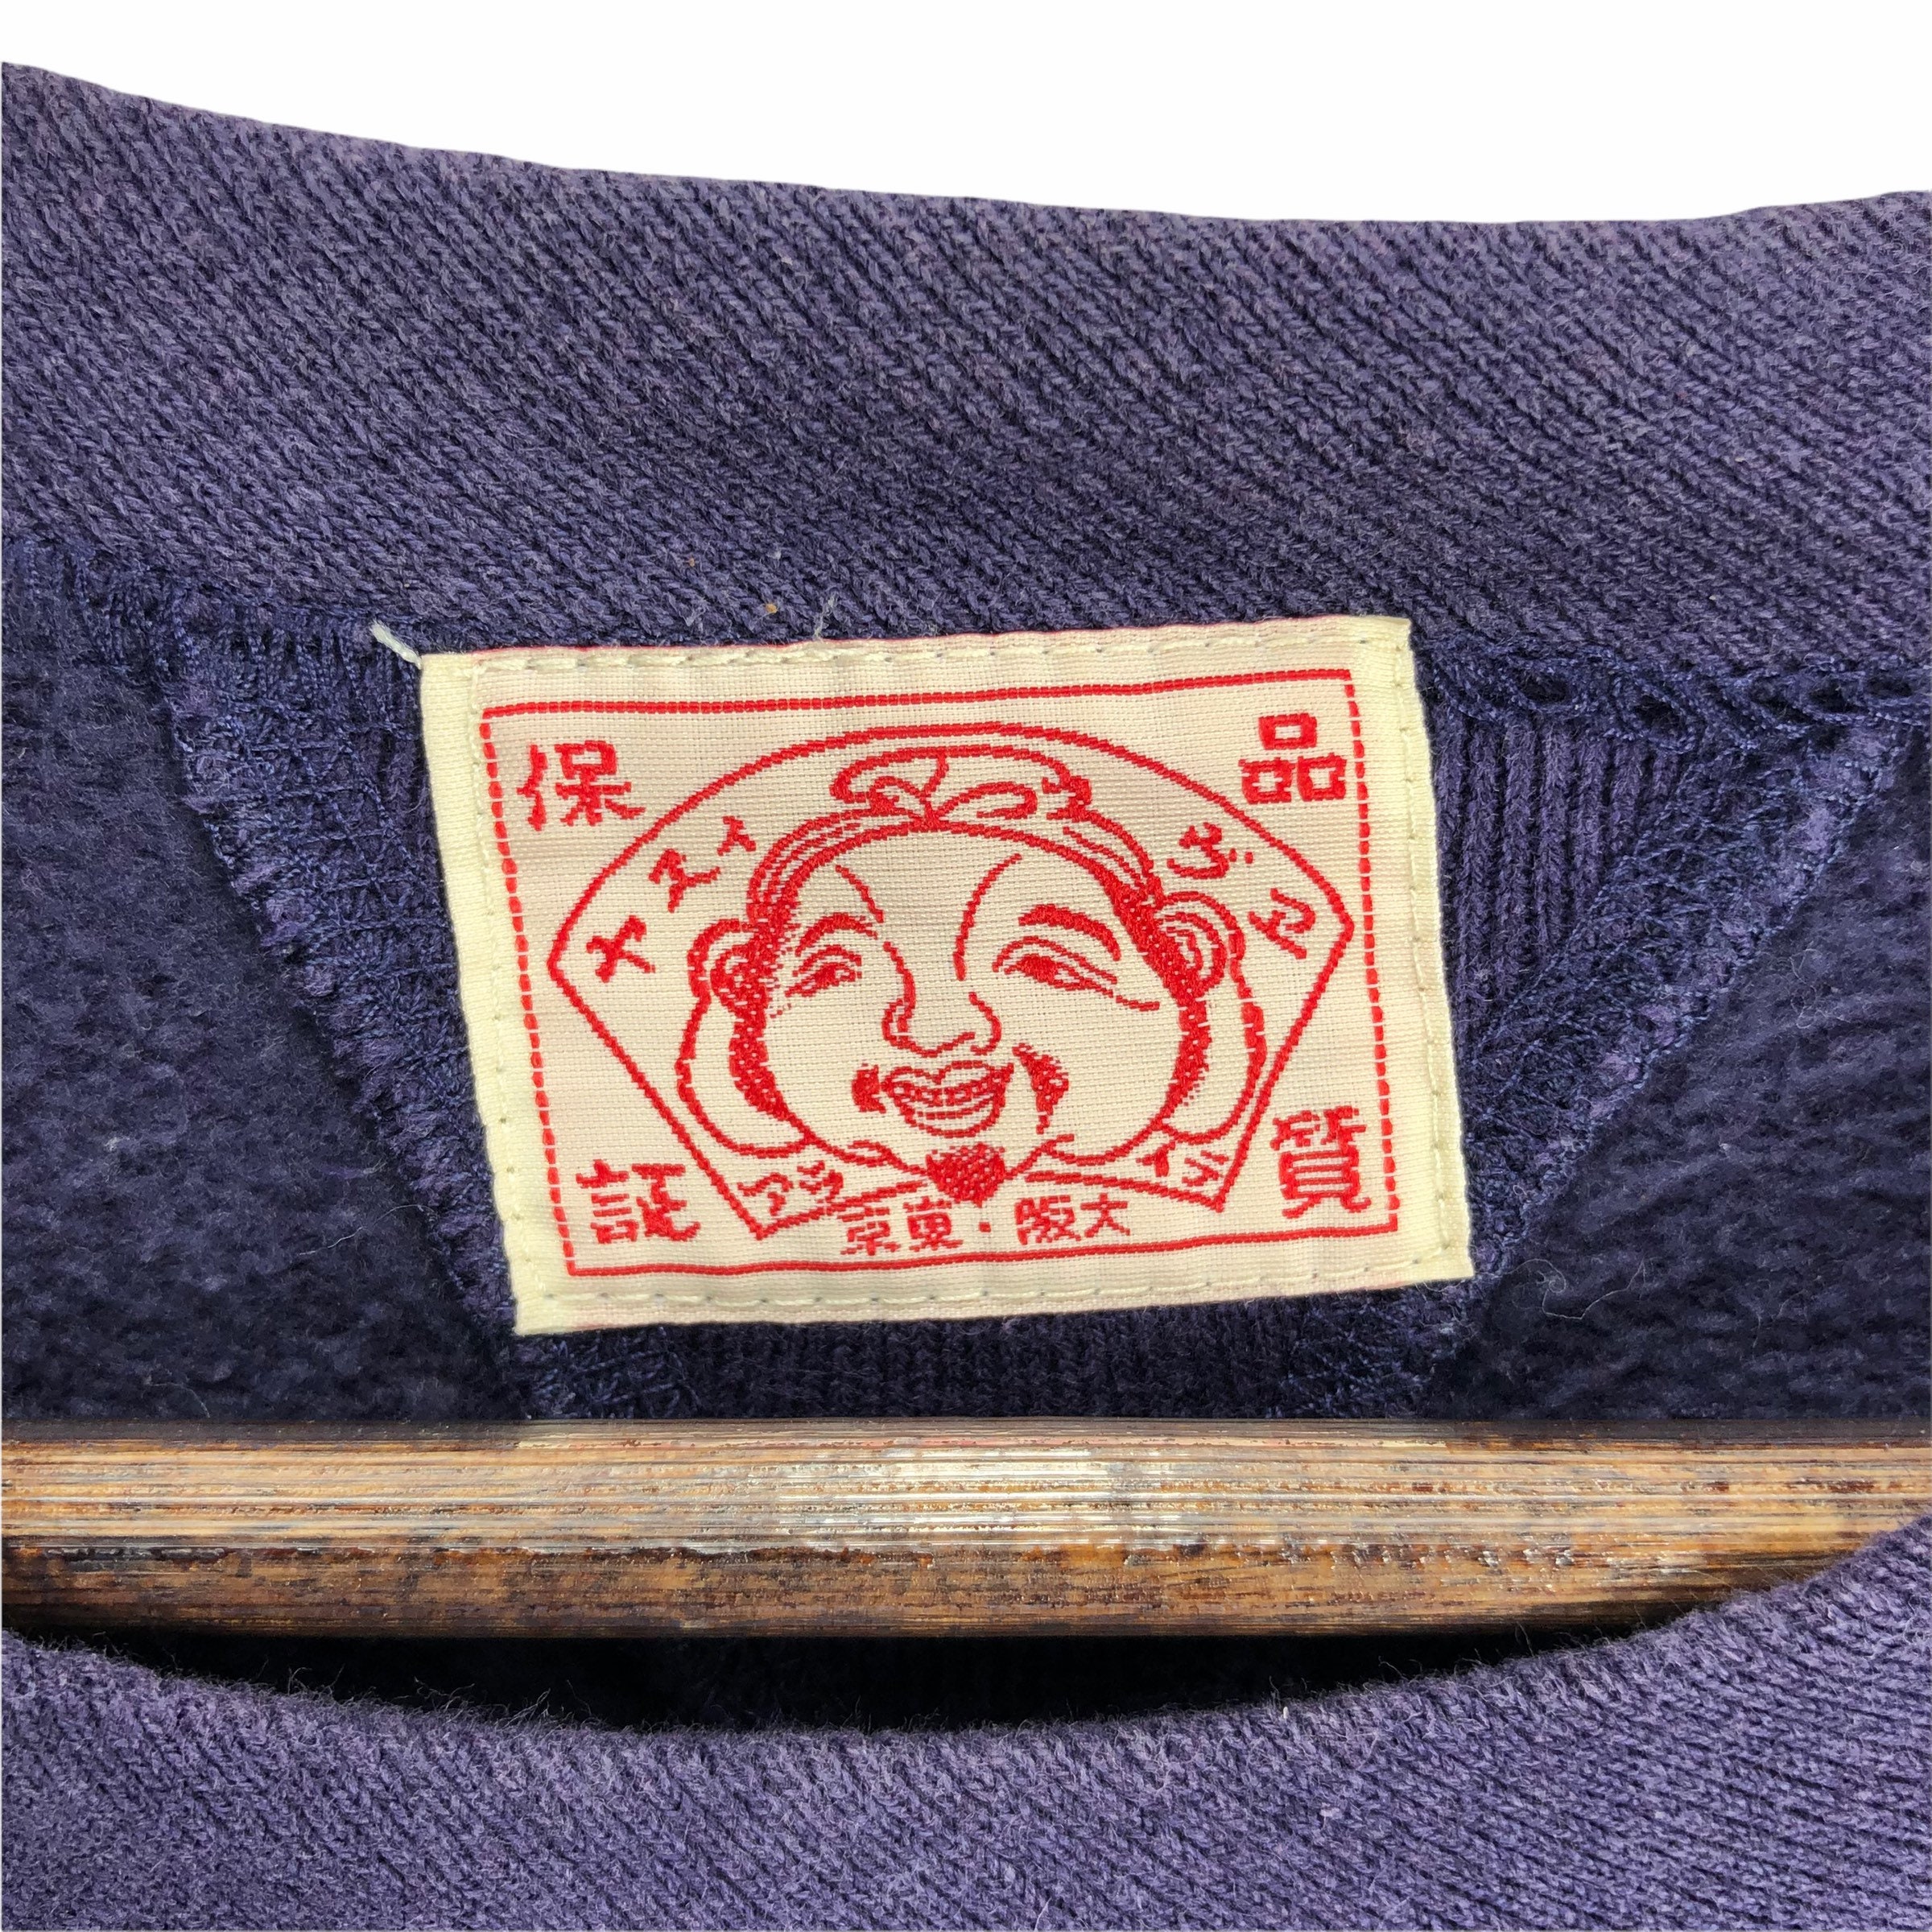 Vintage Evisu Japan Sweatshirt Crewneck Spellout Big Logo Made in Japan ...